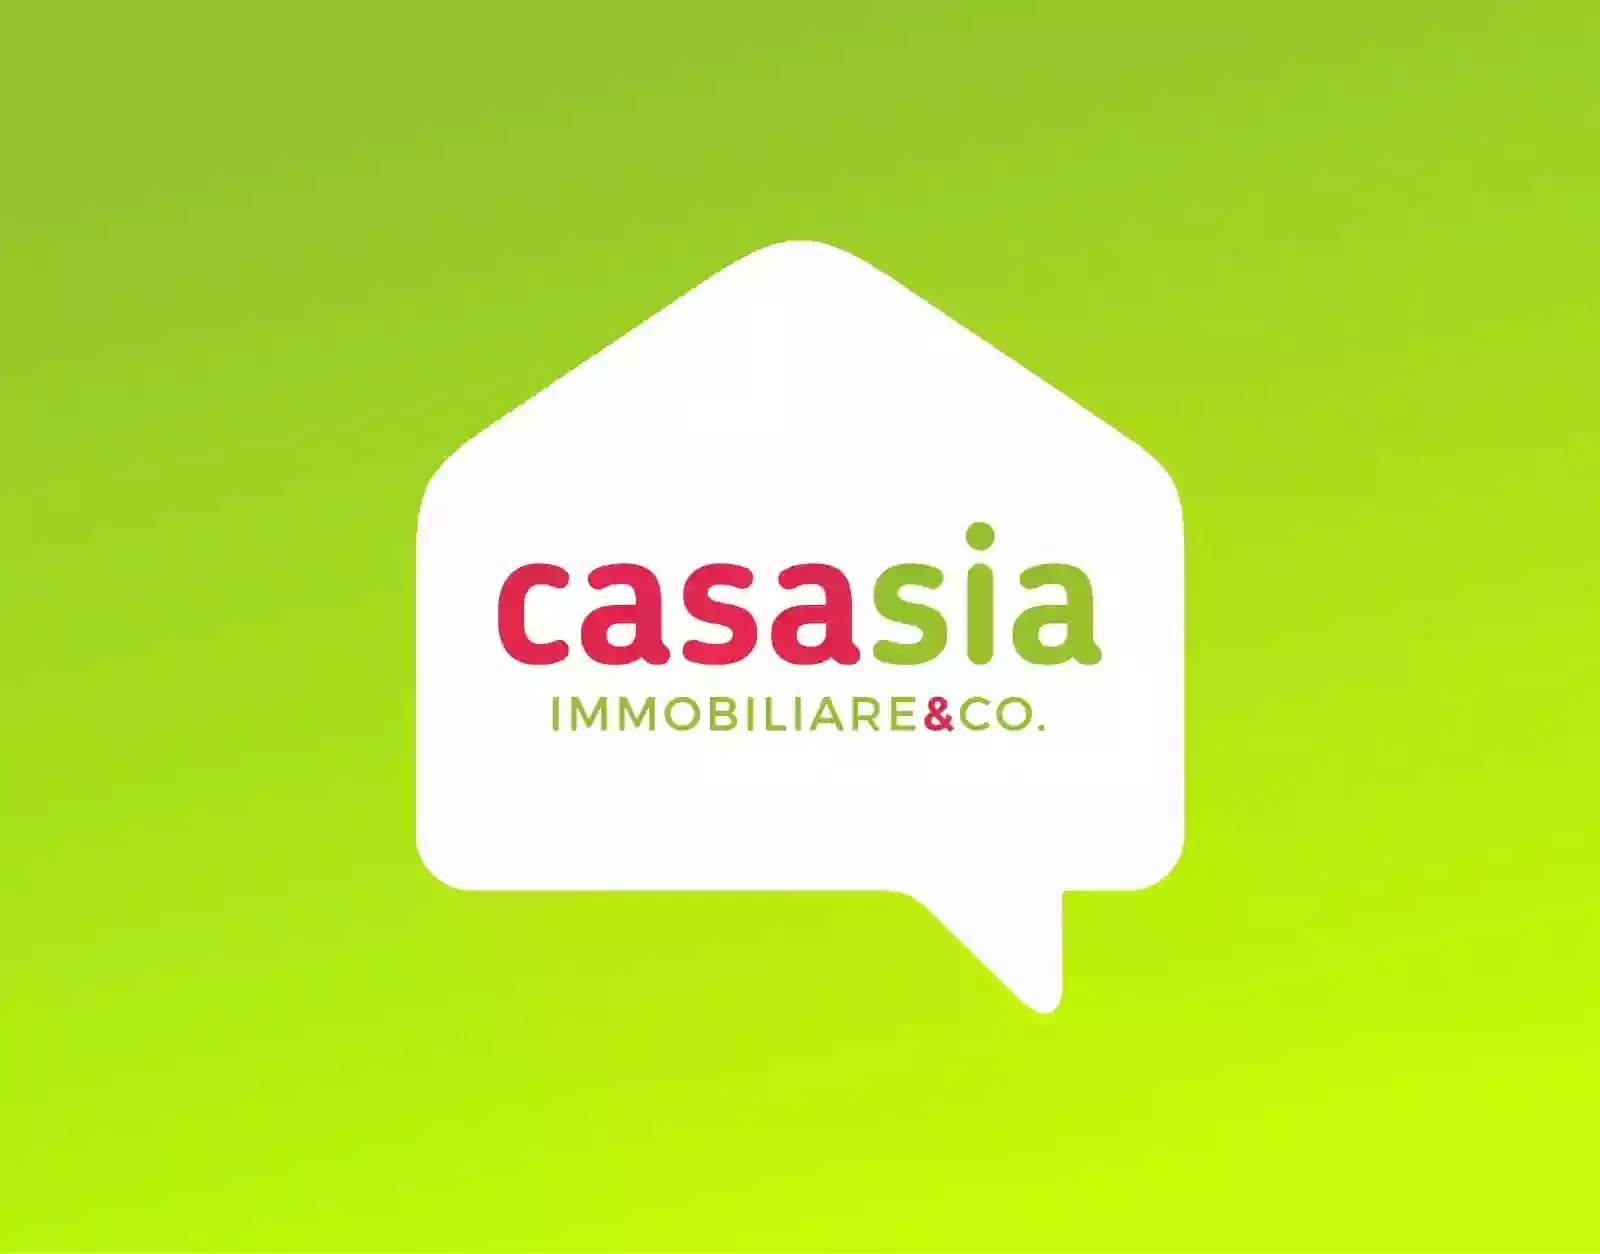 Casasia